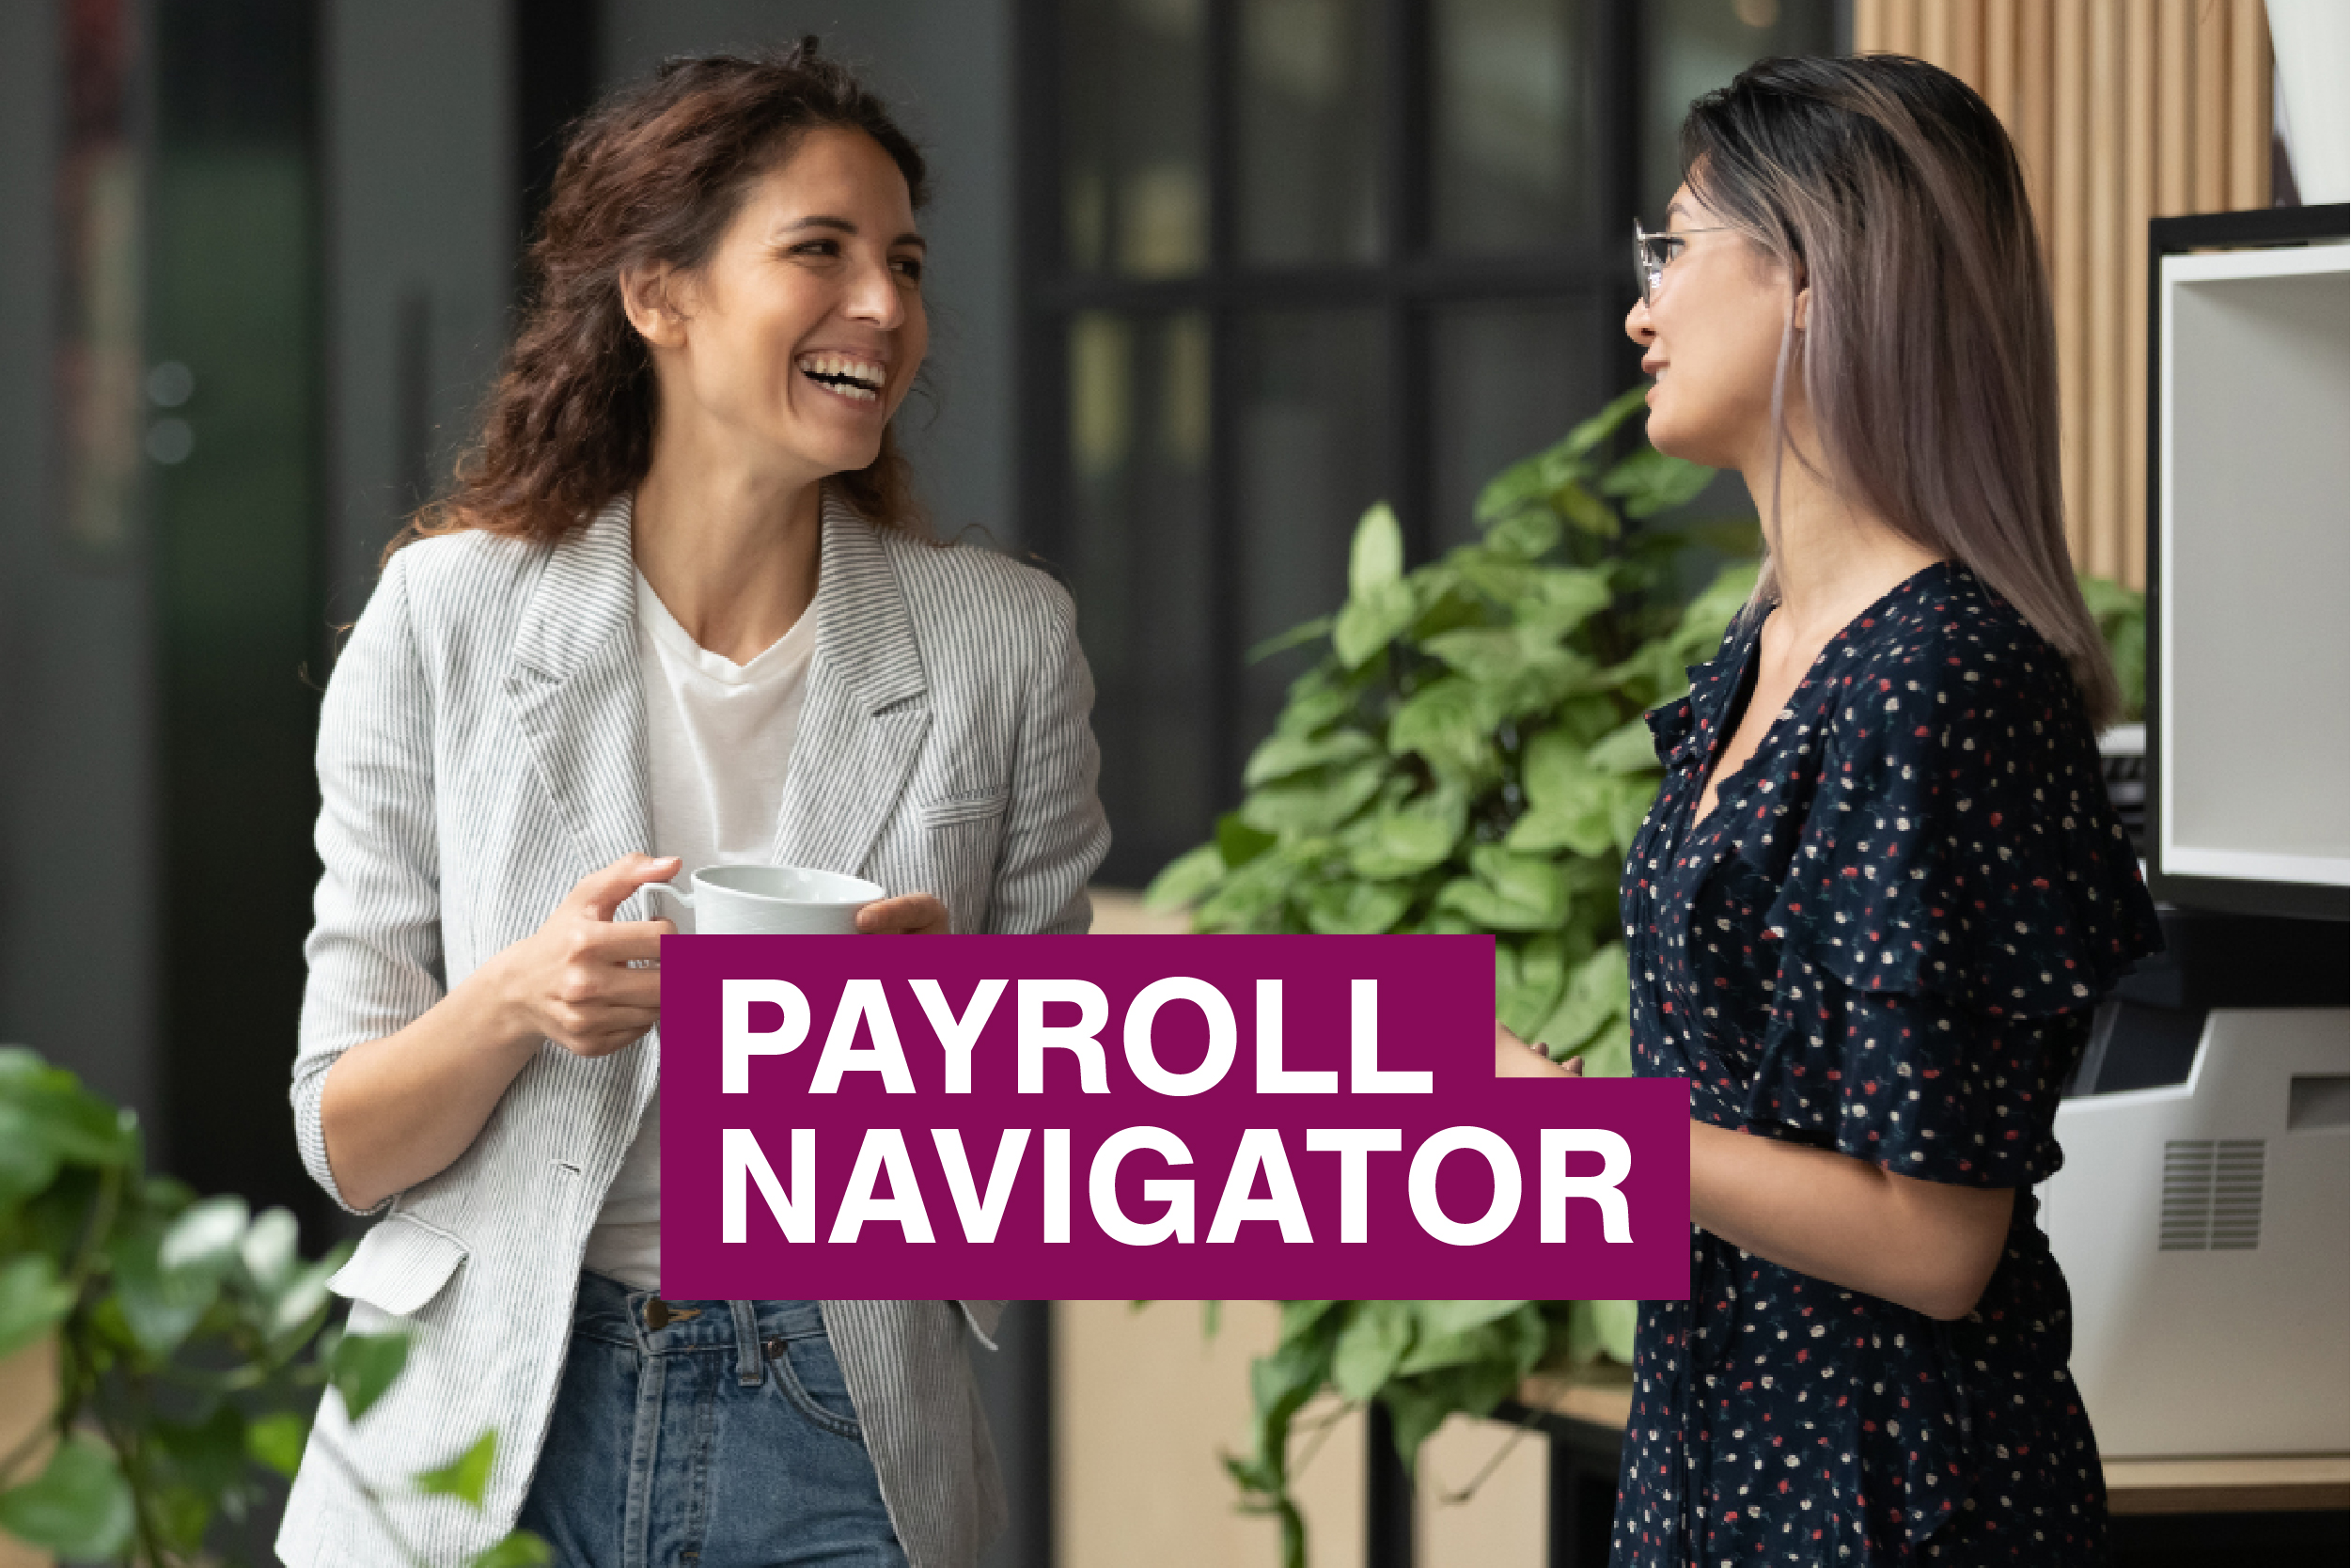 Payroll navigator